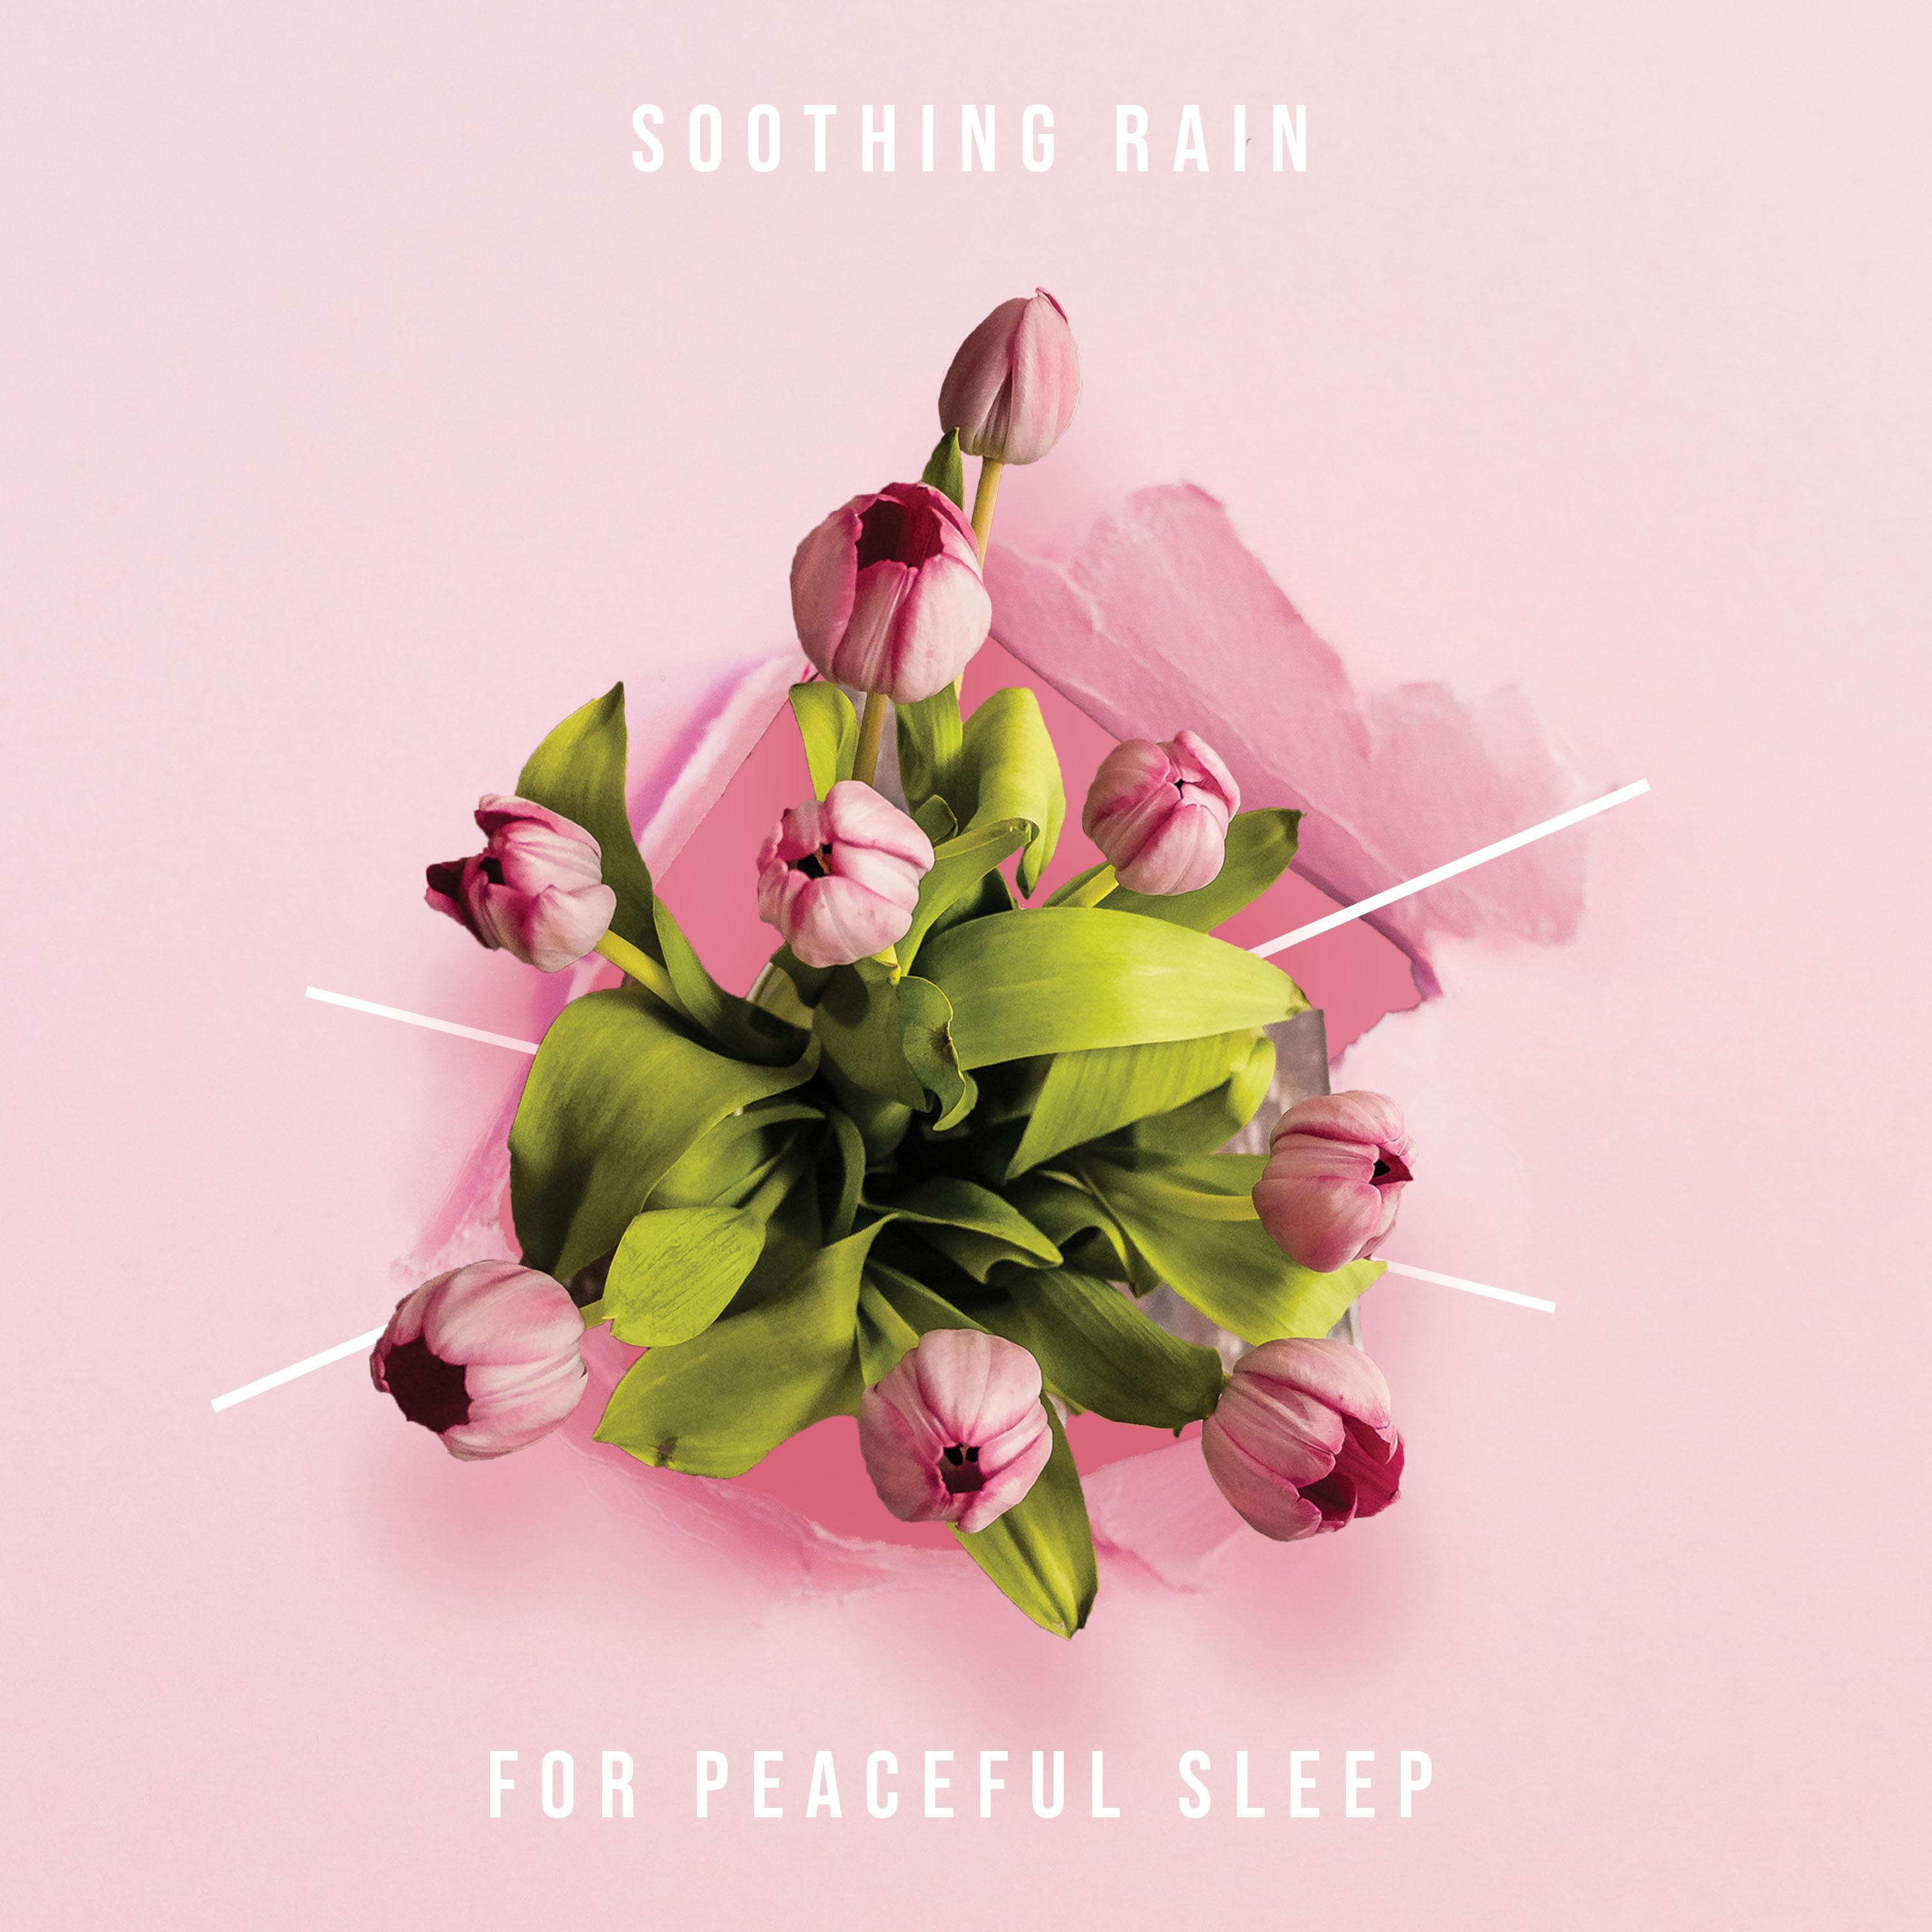 18 Soothing Rain Songs for Peaceful Night Sleep